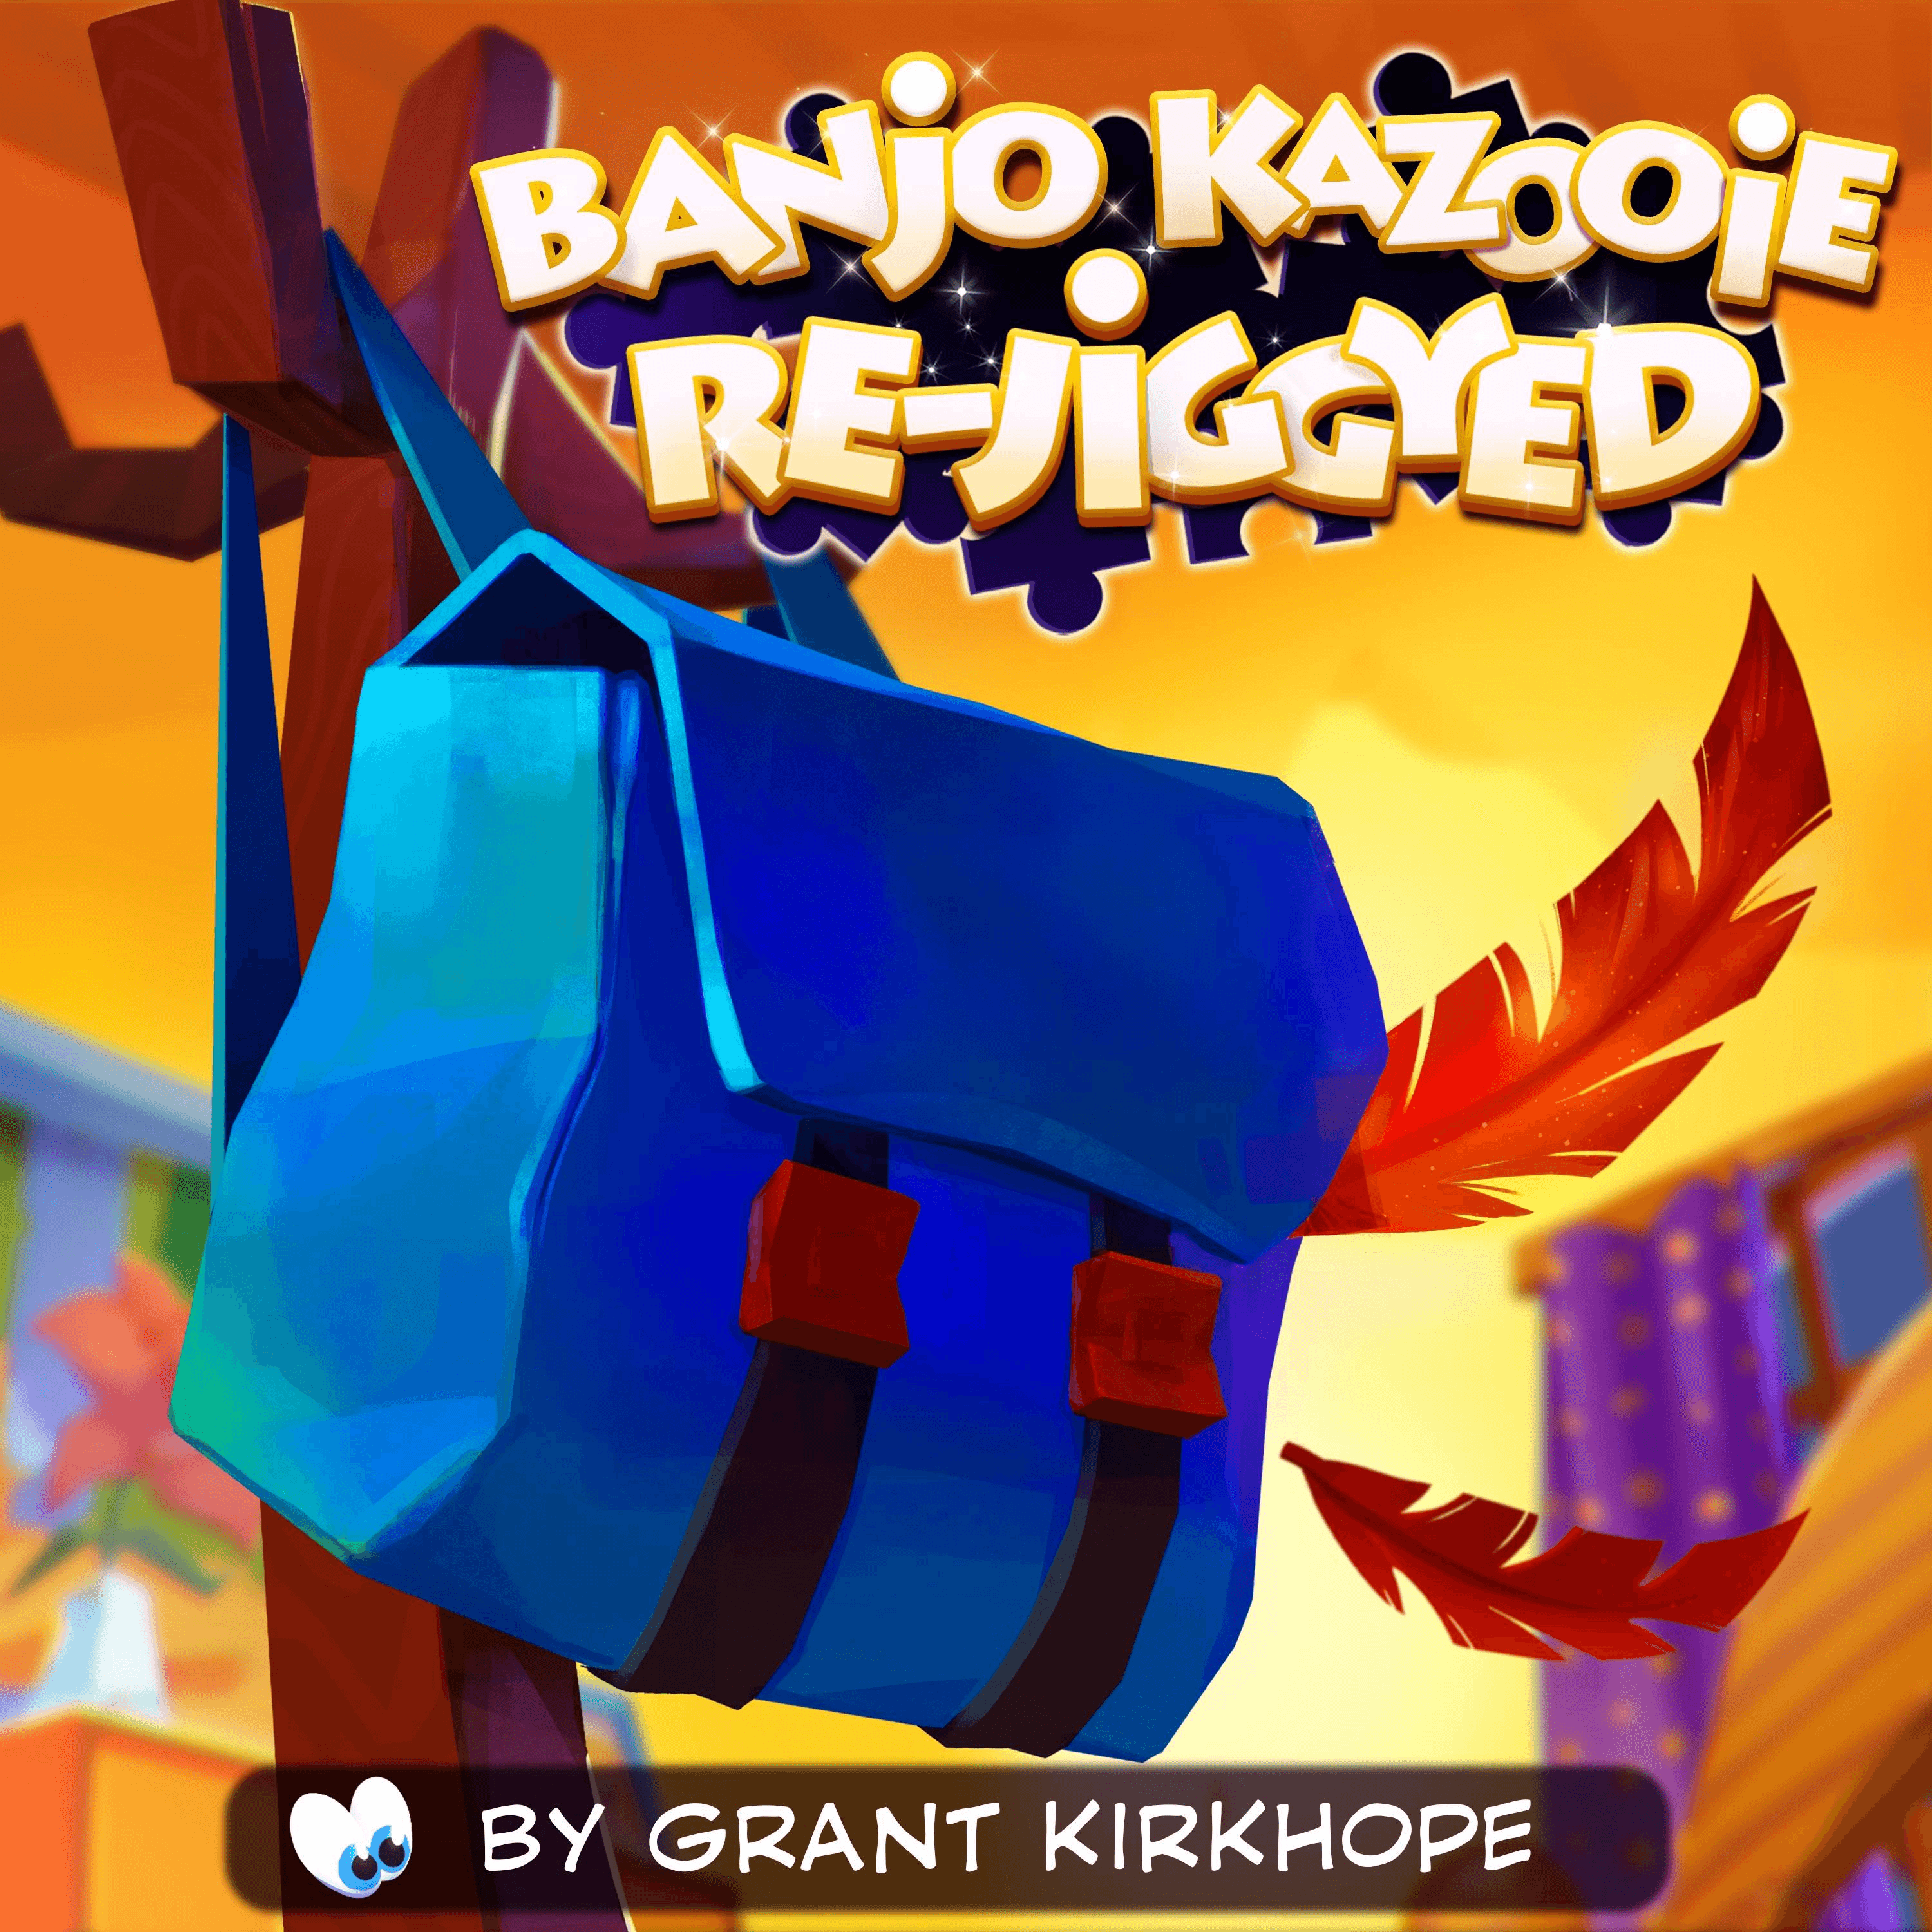 Banjo Kazooie: Re-Jiggyed